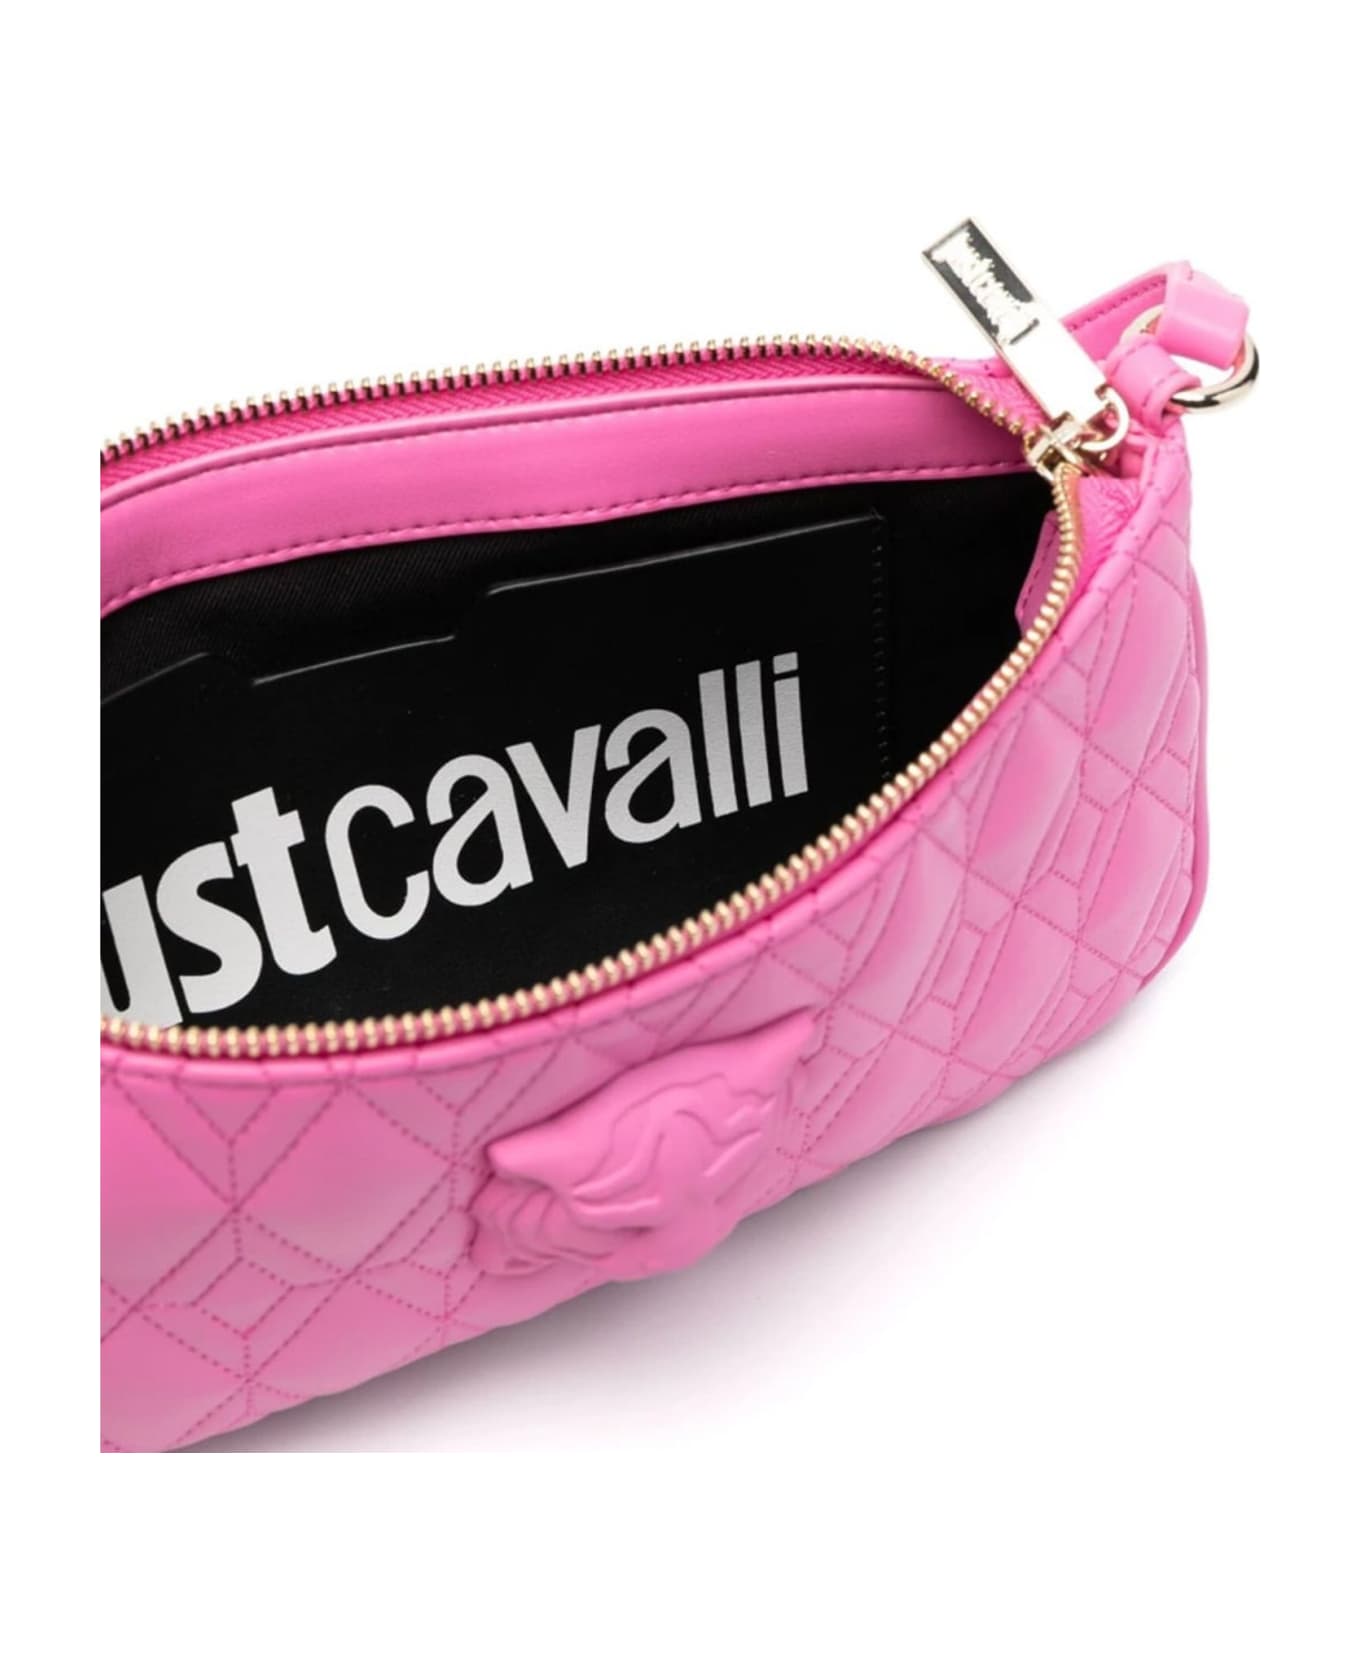 Just Cavalli Bag - Pink